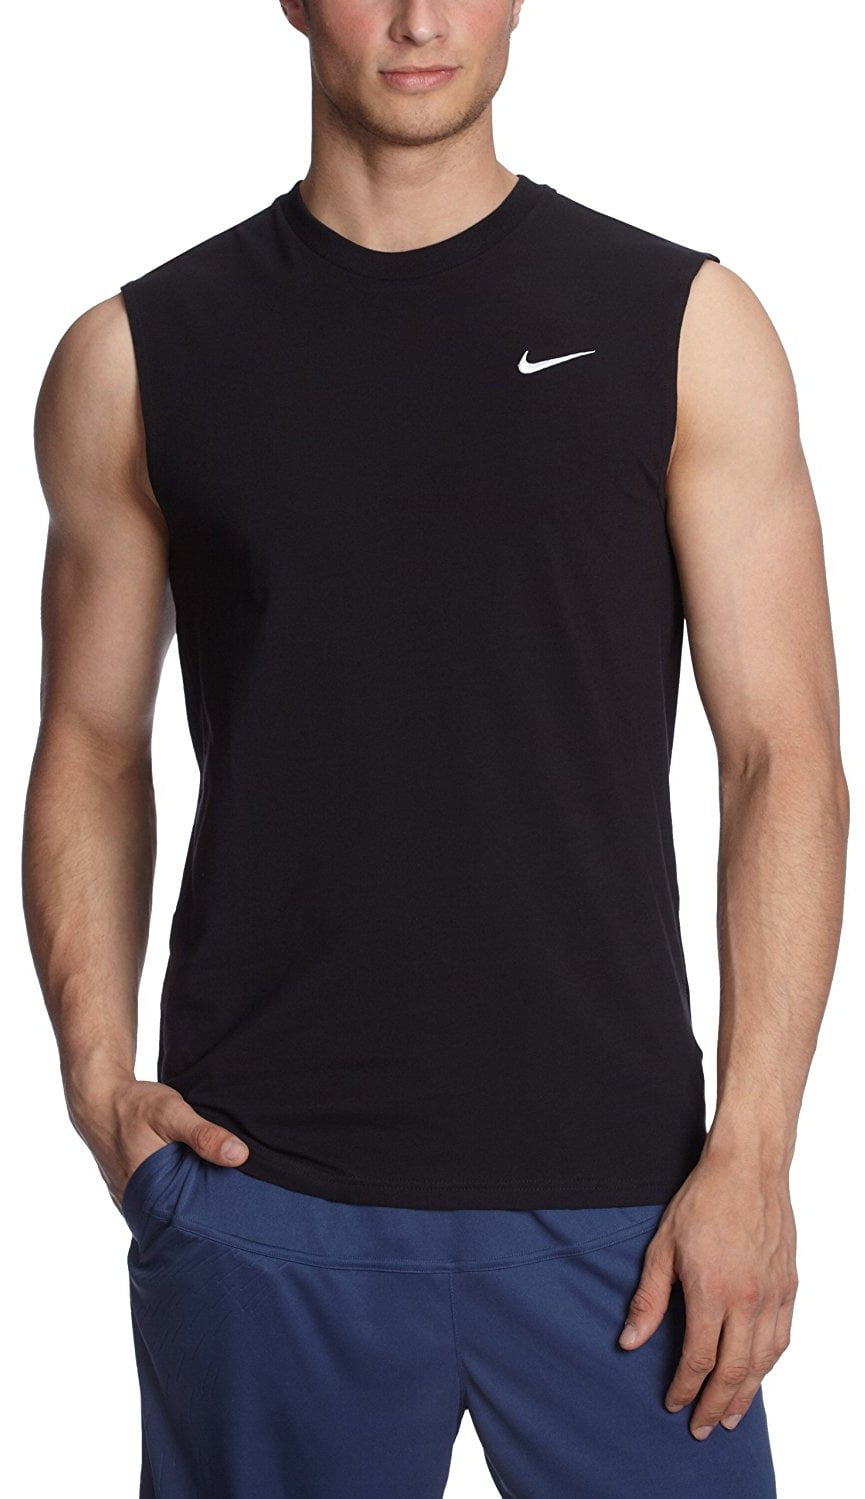 Nike - Nike Men's AD Sleeveless T-Shirt-Black - Walmart.com - Walmart.com